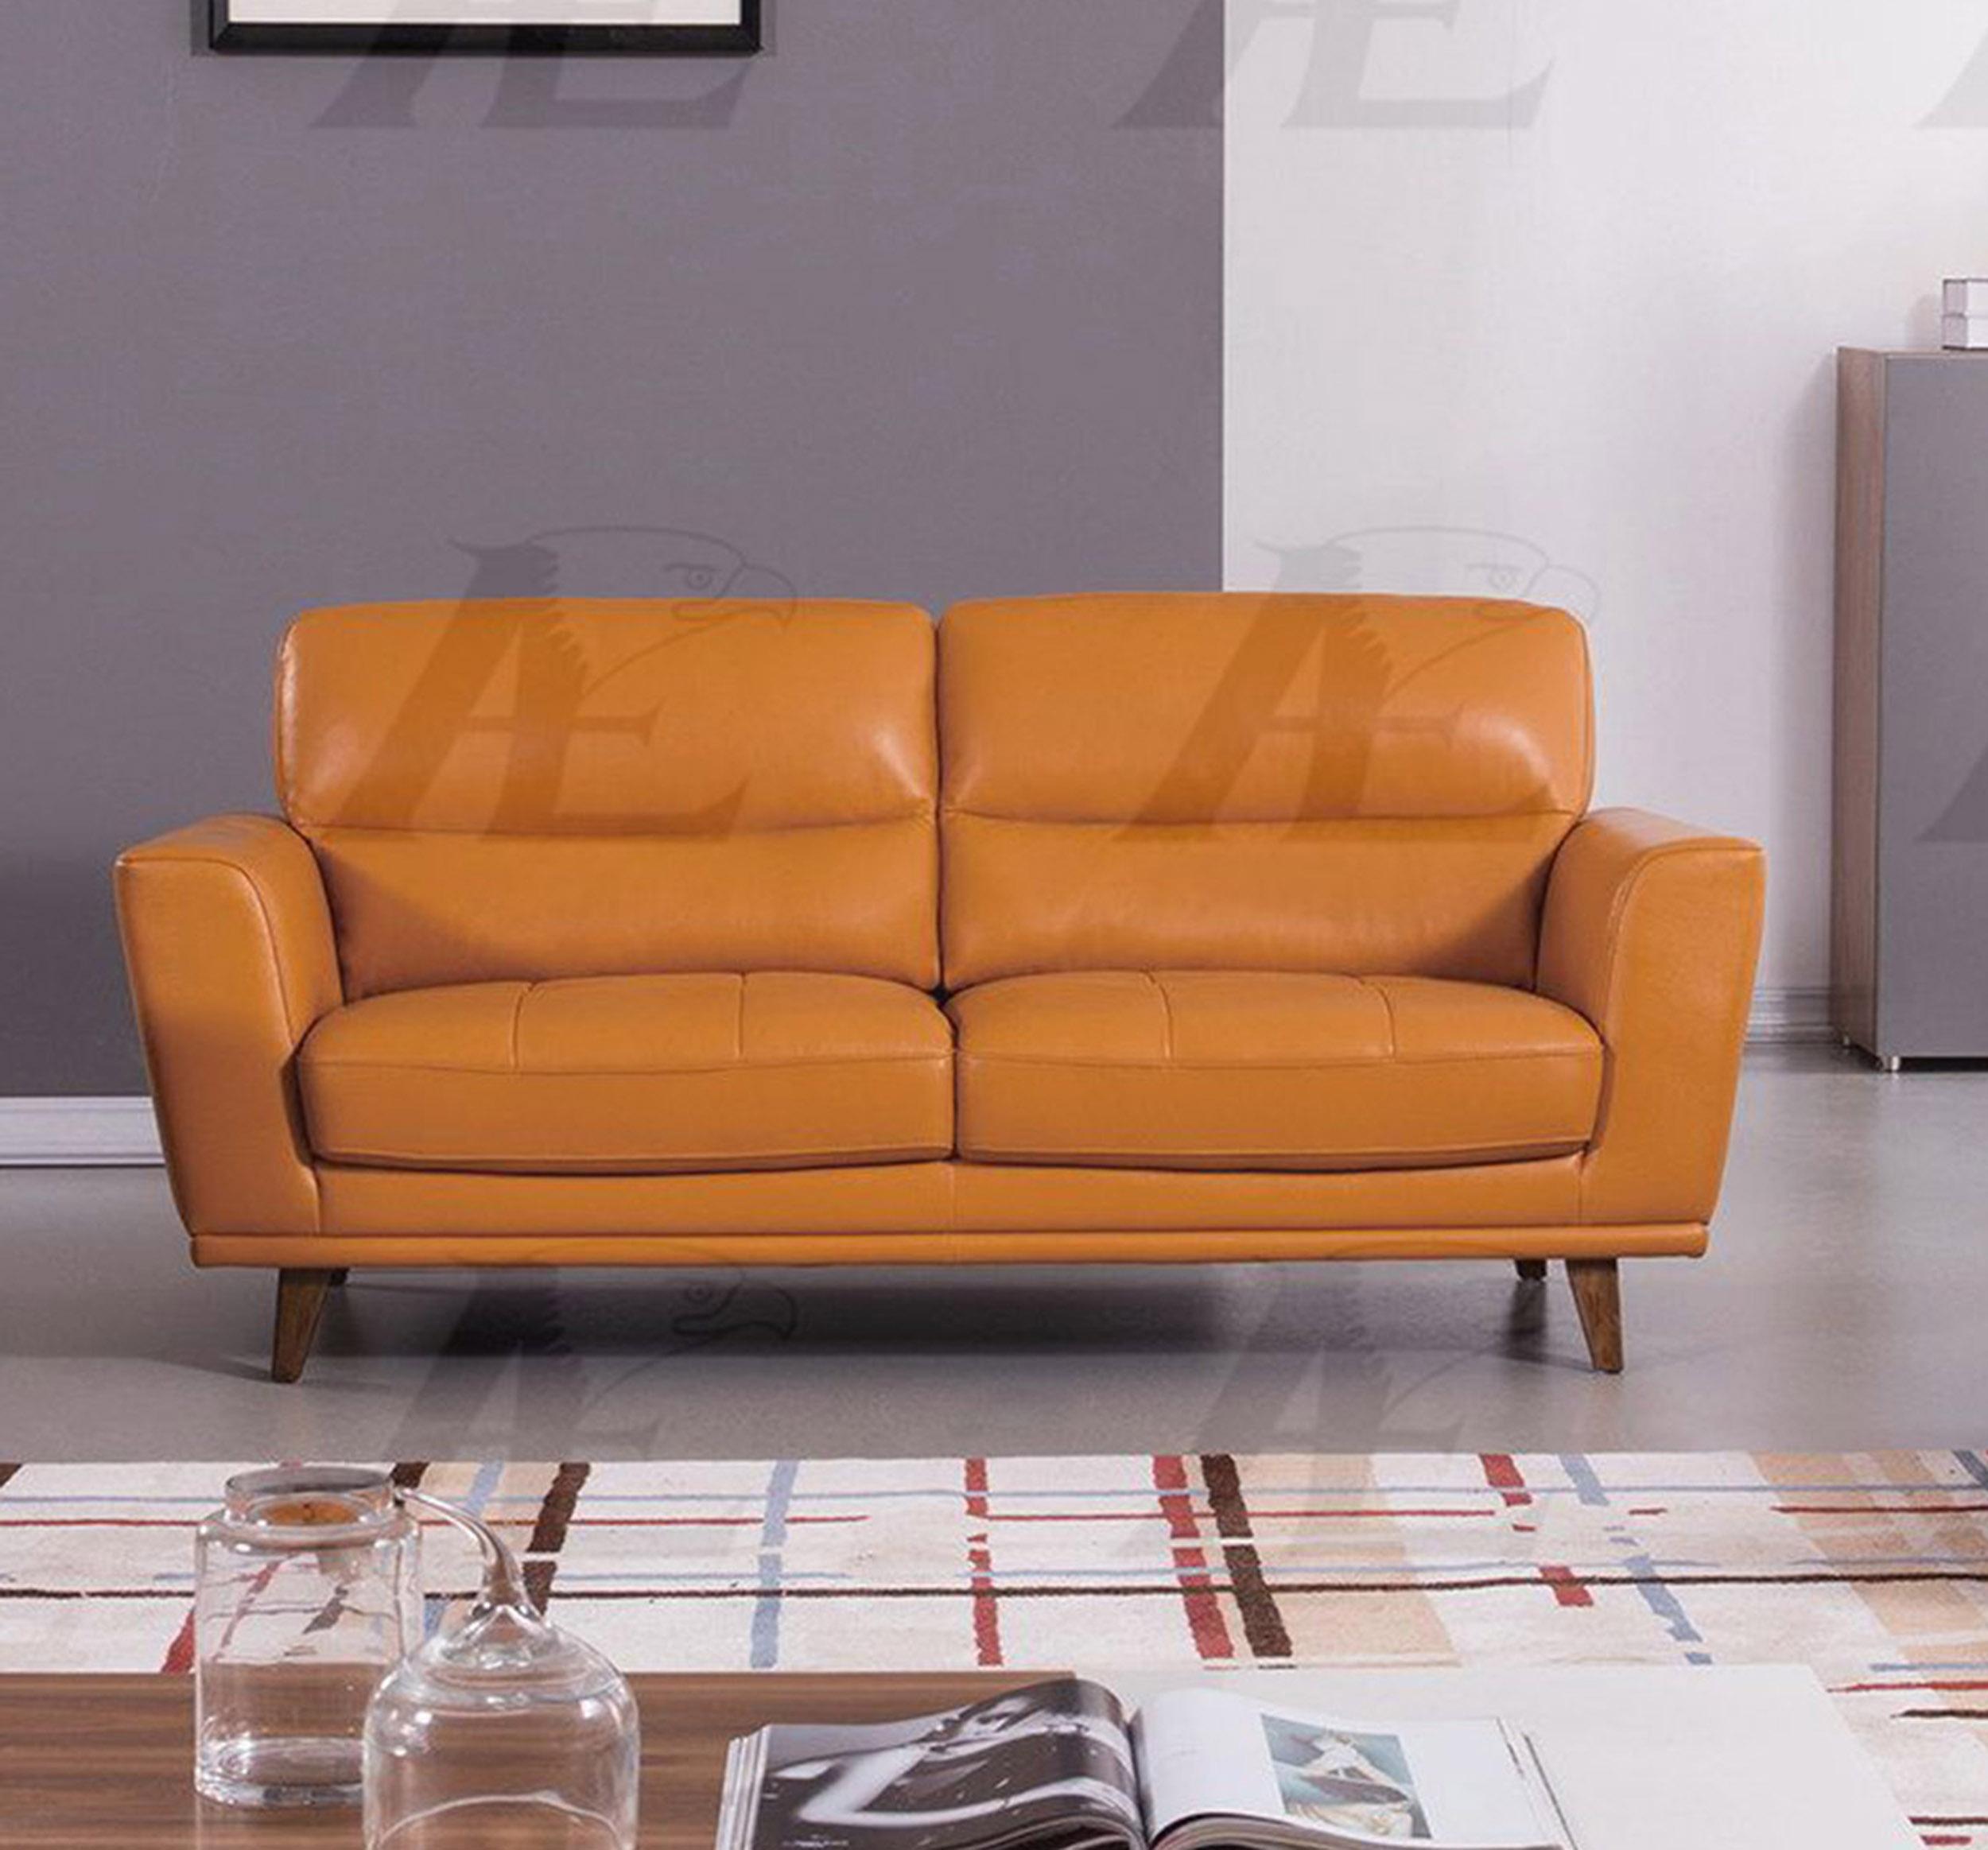 

    
American Eagle Furniture EK082-ORG Orange Sofa Italian Leather
